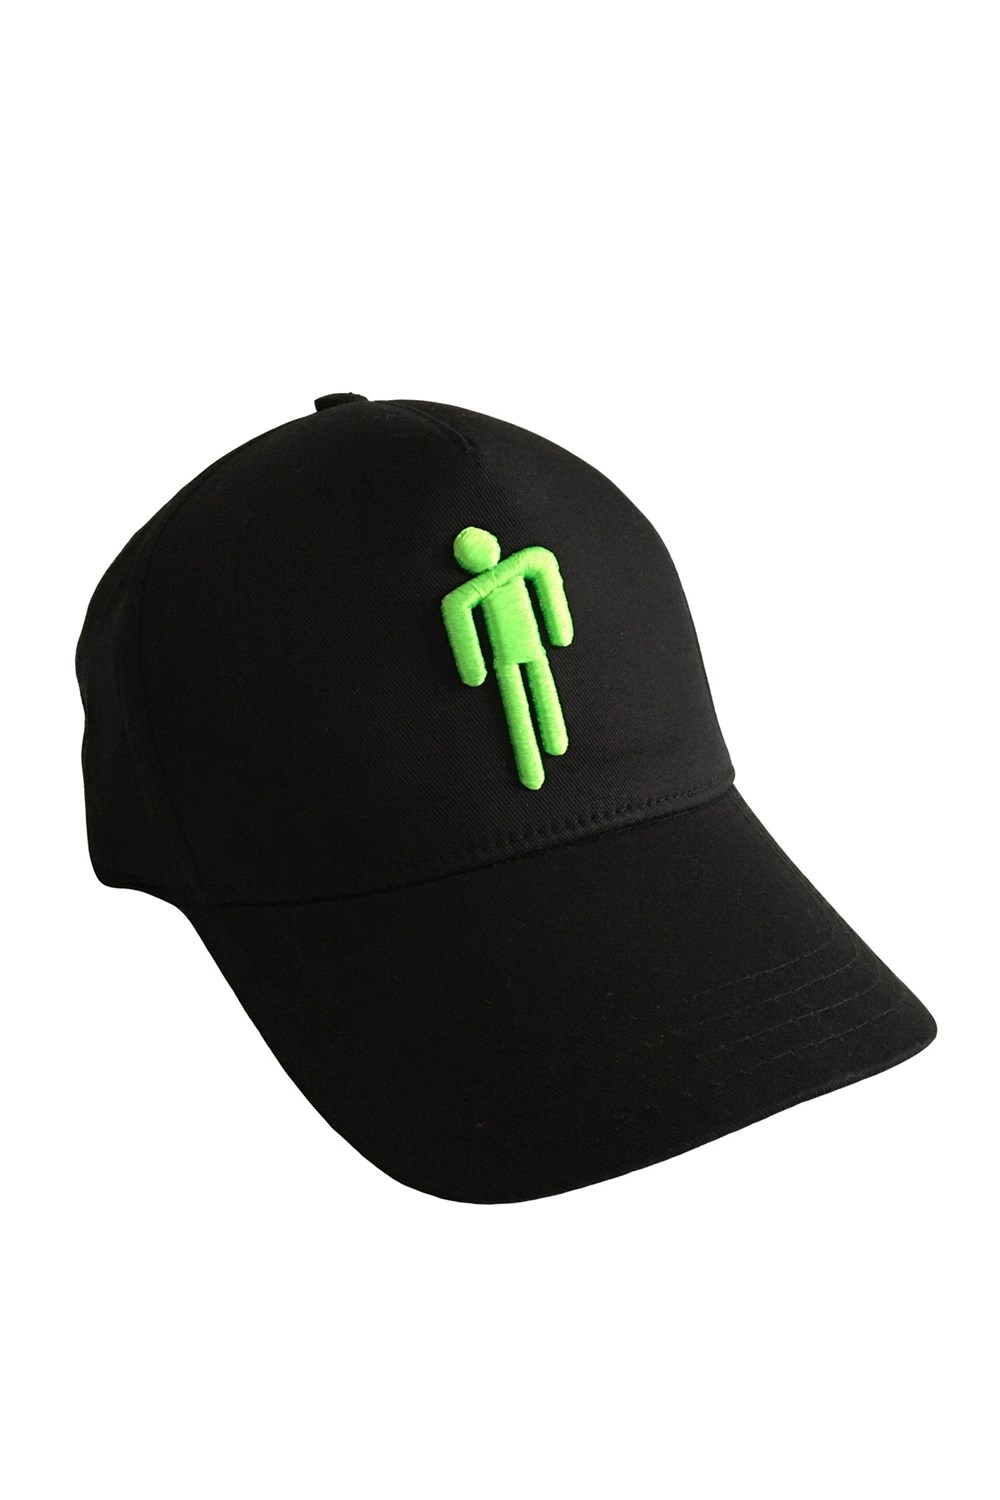 Billie Eilish Neon Yeşil Nakış Siyah Şapka